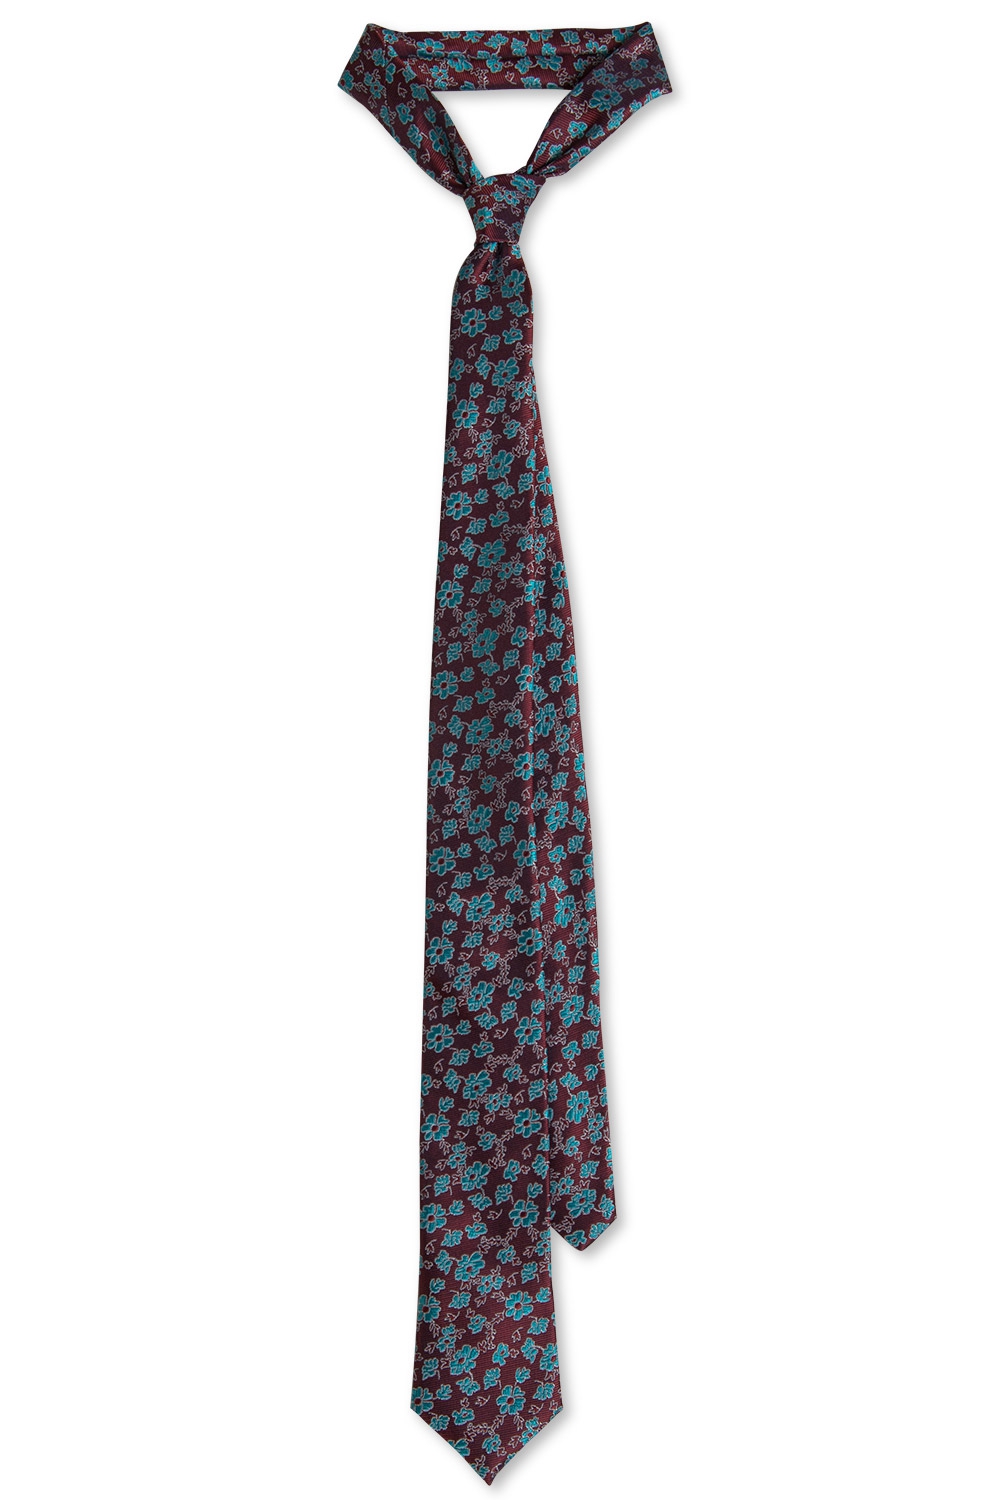 Cravata poliester grena print floral 3